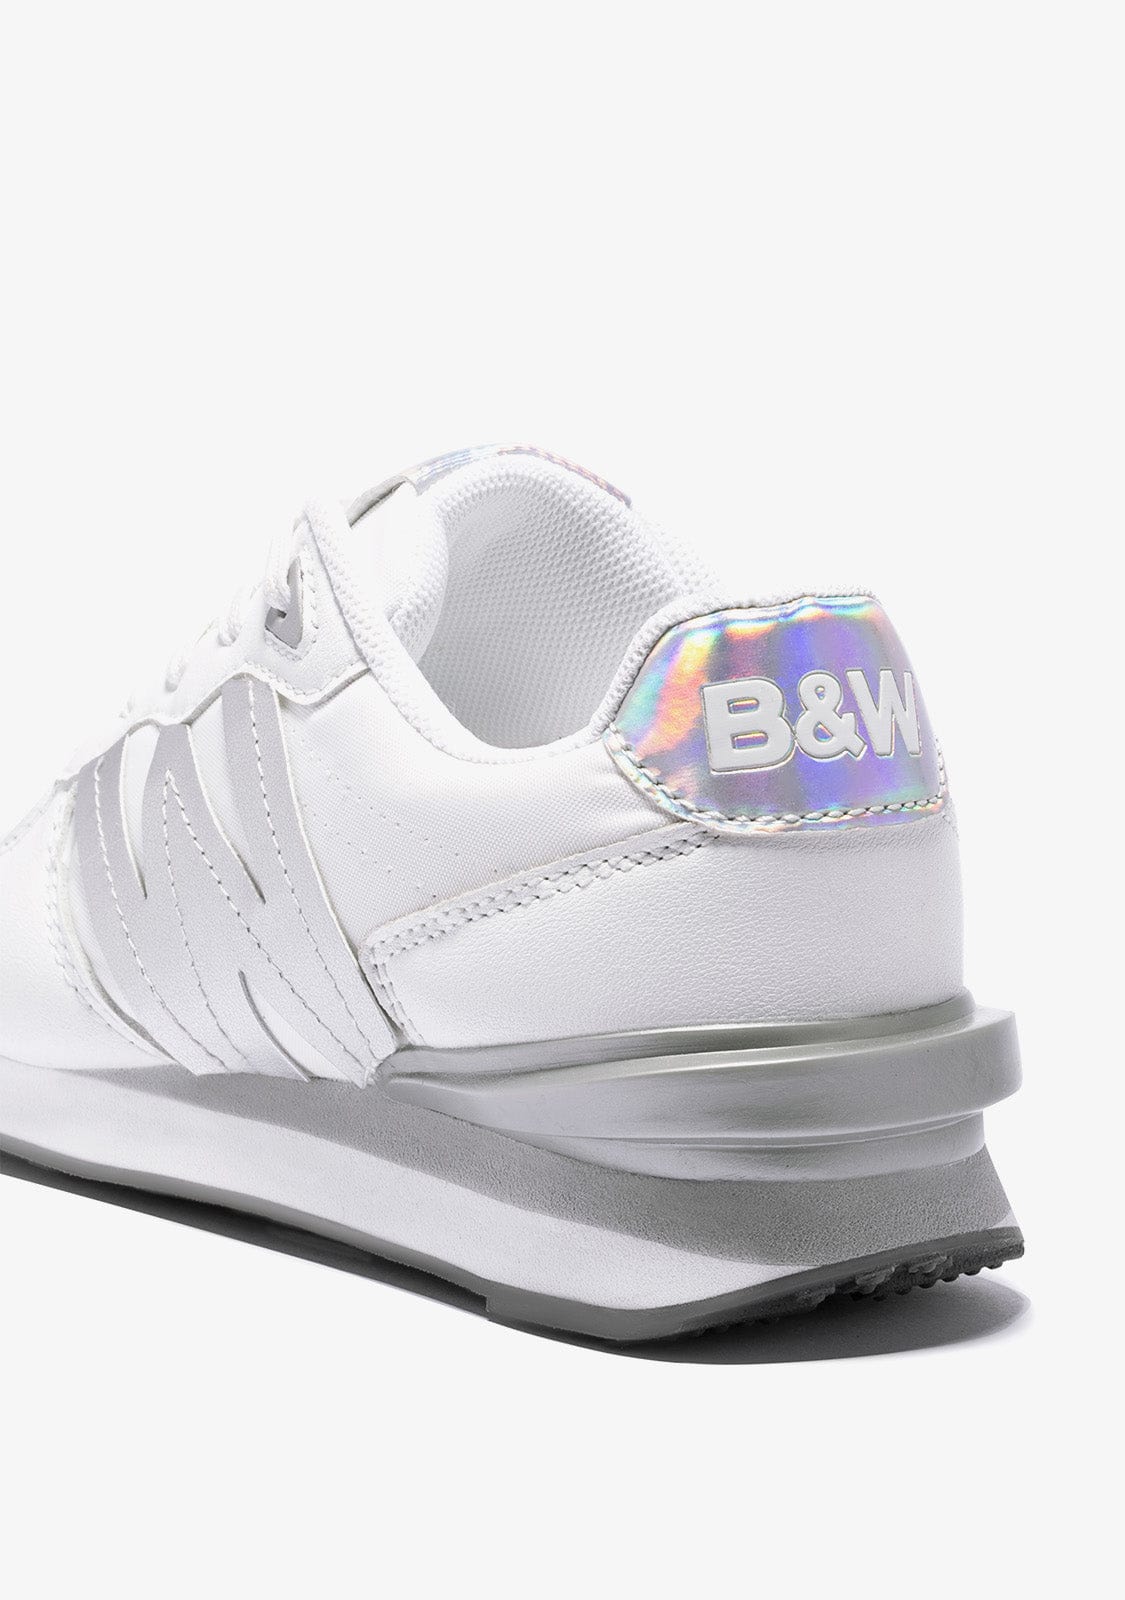 B&W JUNIOR Shoes Girl's White Silver Logo Sneakers B&W